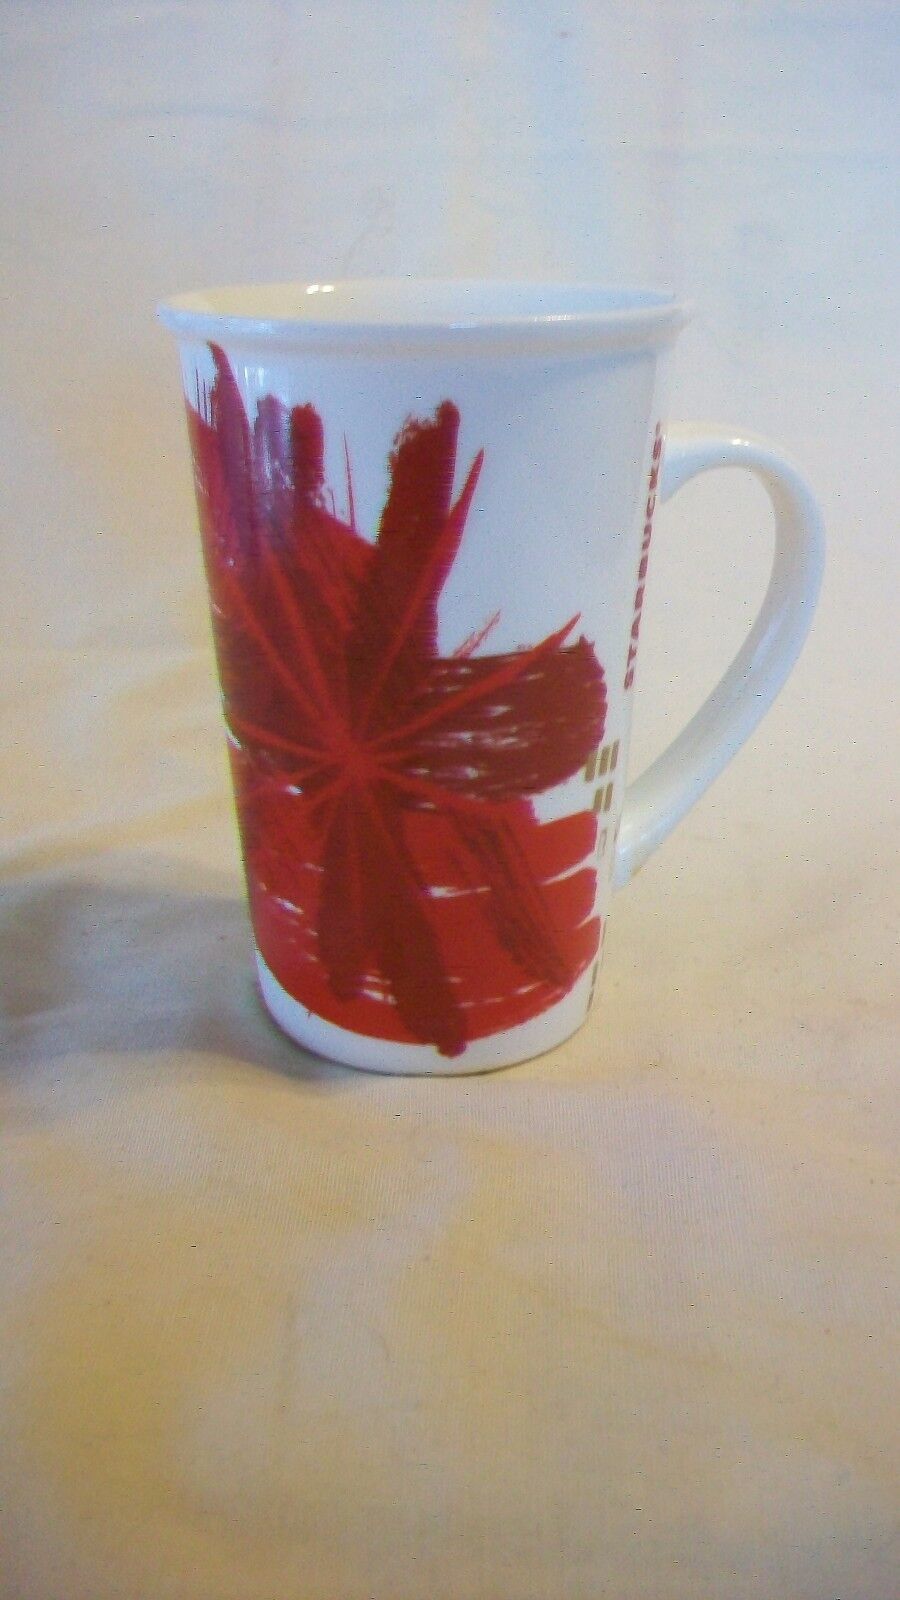 Primary image for Pair of 2014 Starbucks Red Splash Christmas Ceramic Coffee Mugs, holds 12 ounces